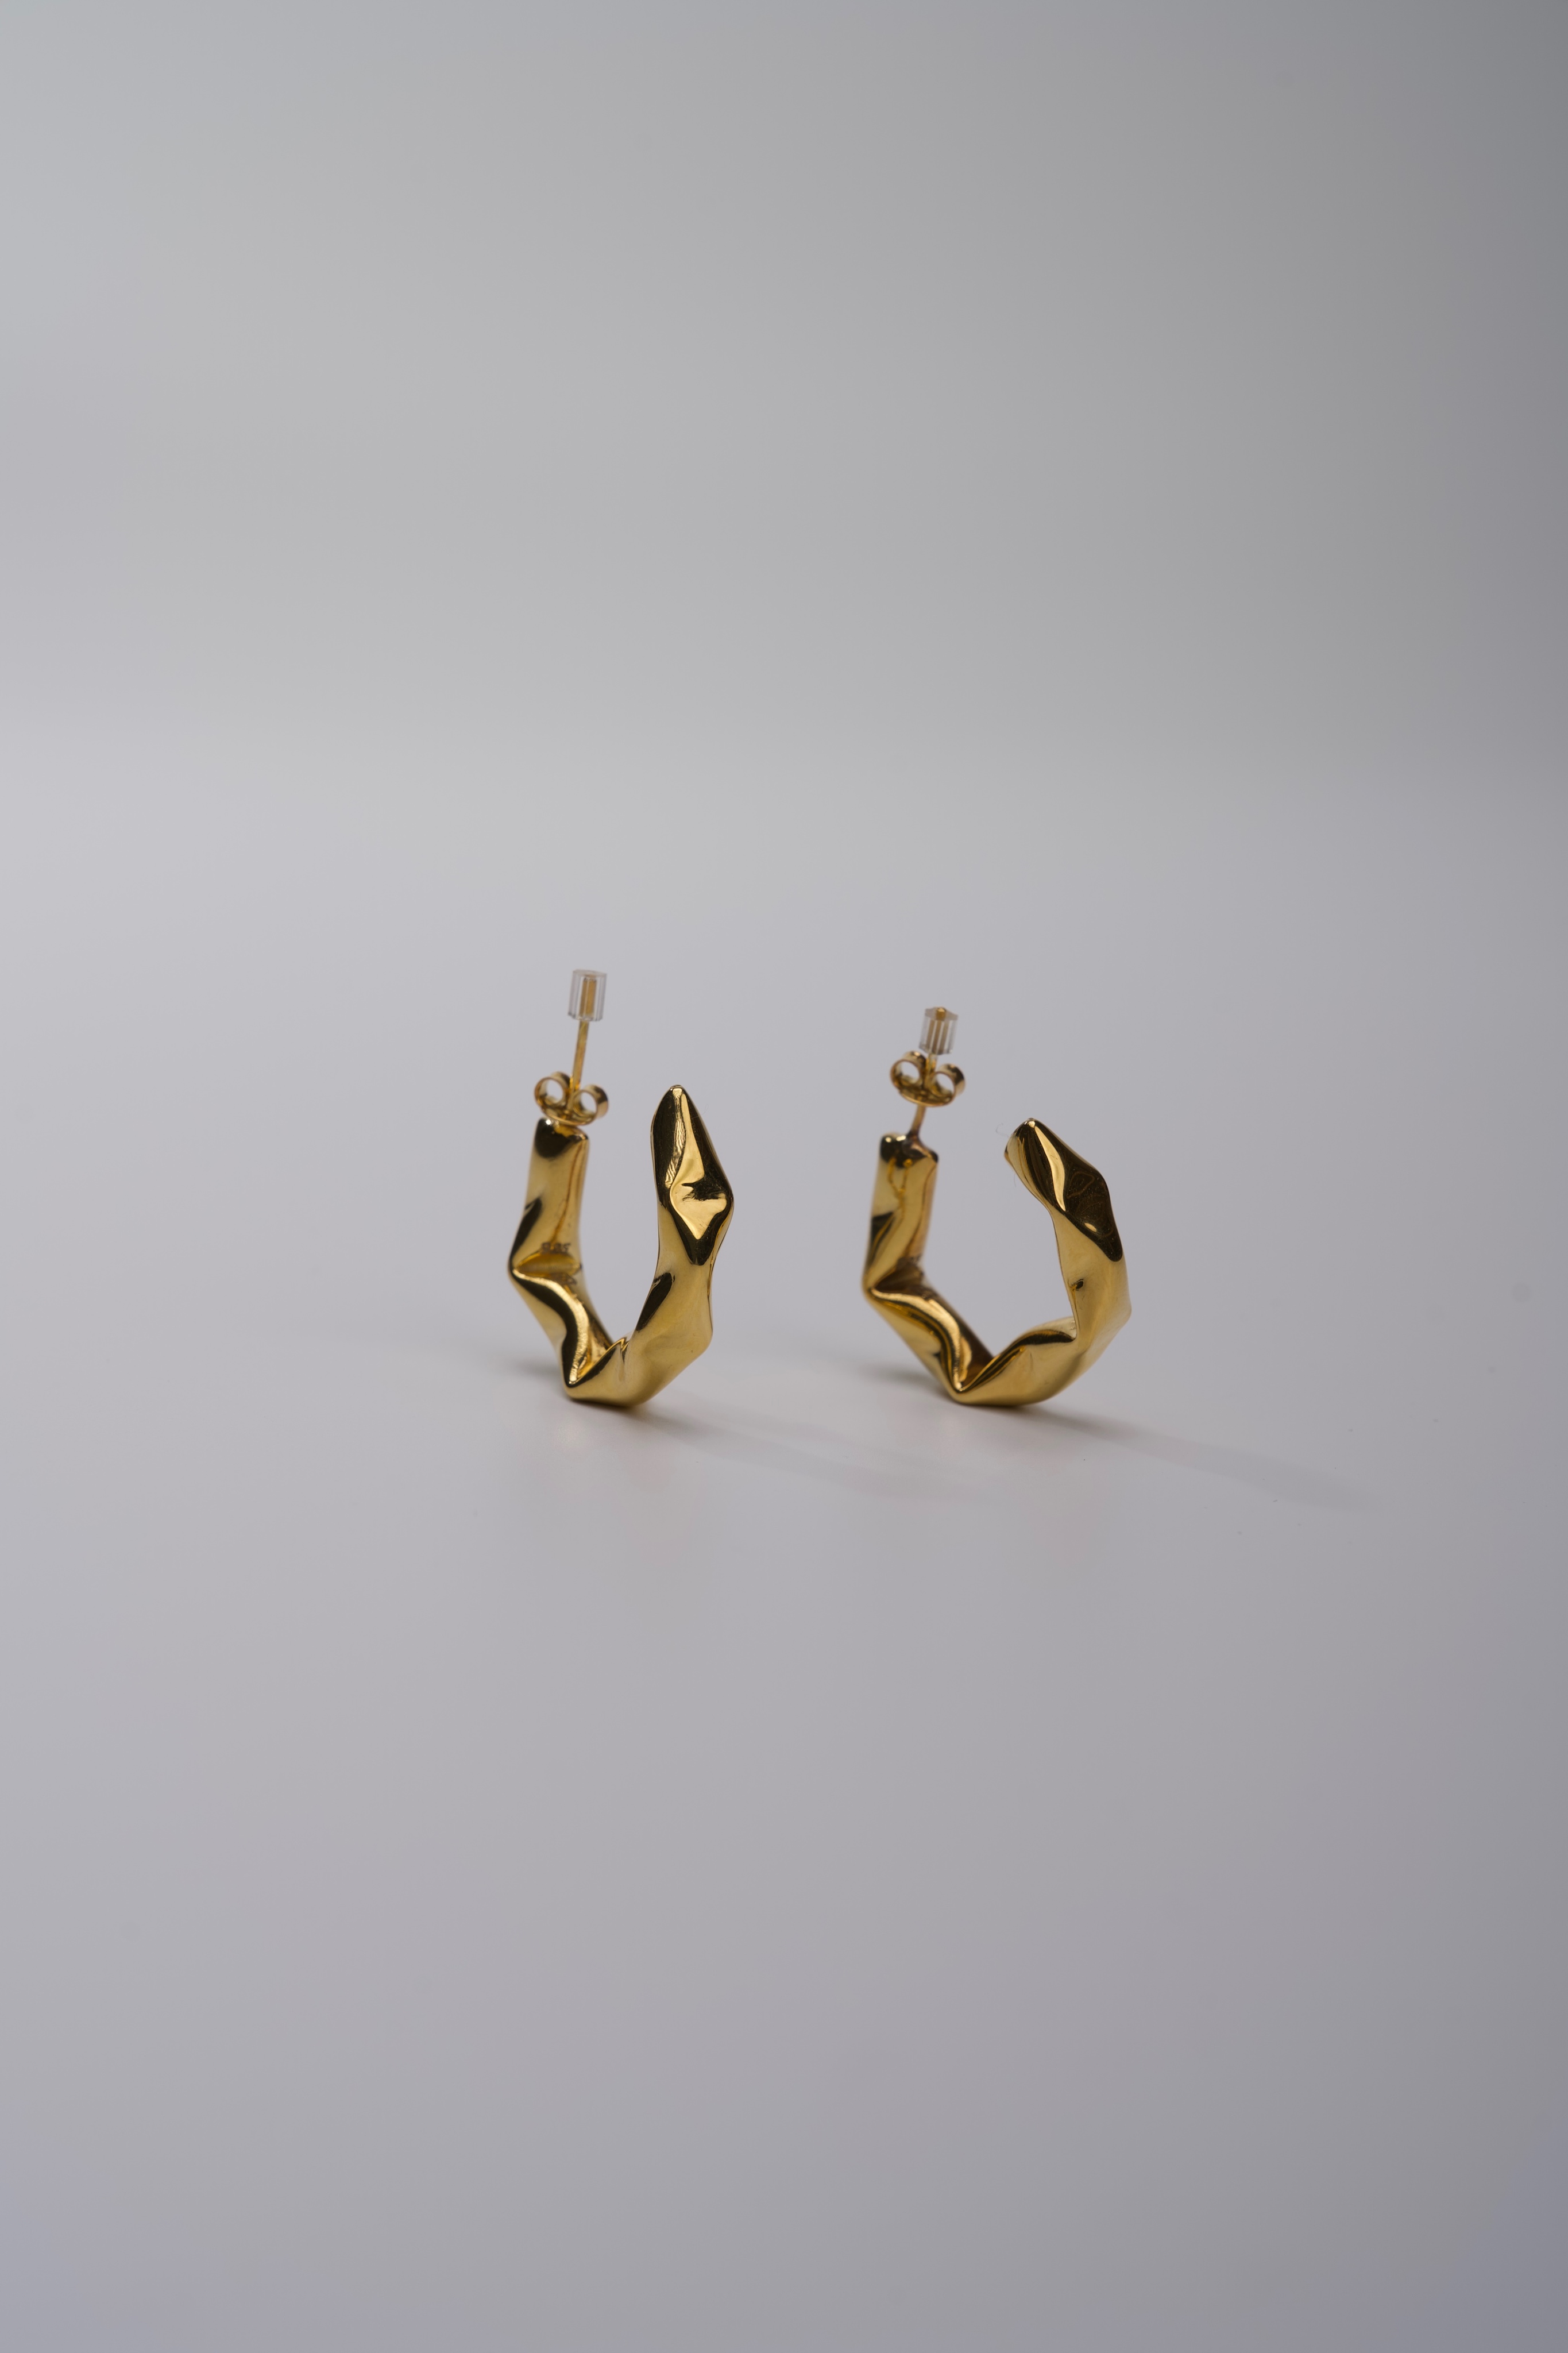 24K yellow gold vermeil small earring hoops in 925 silver